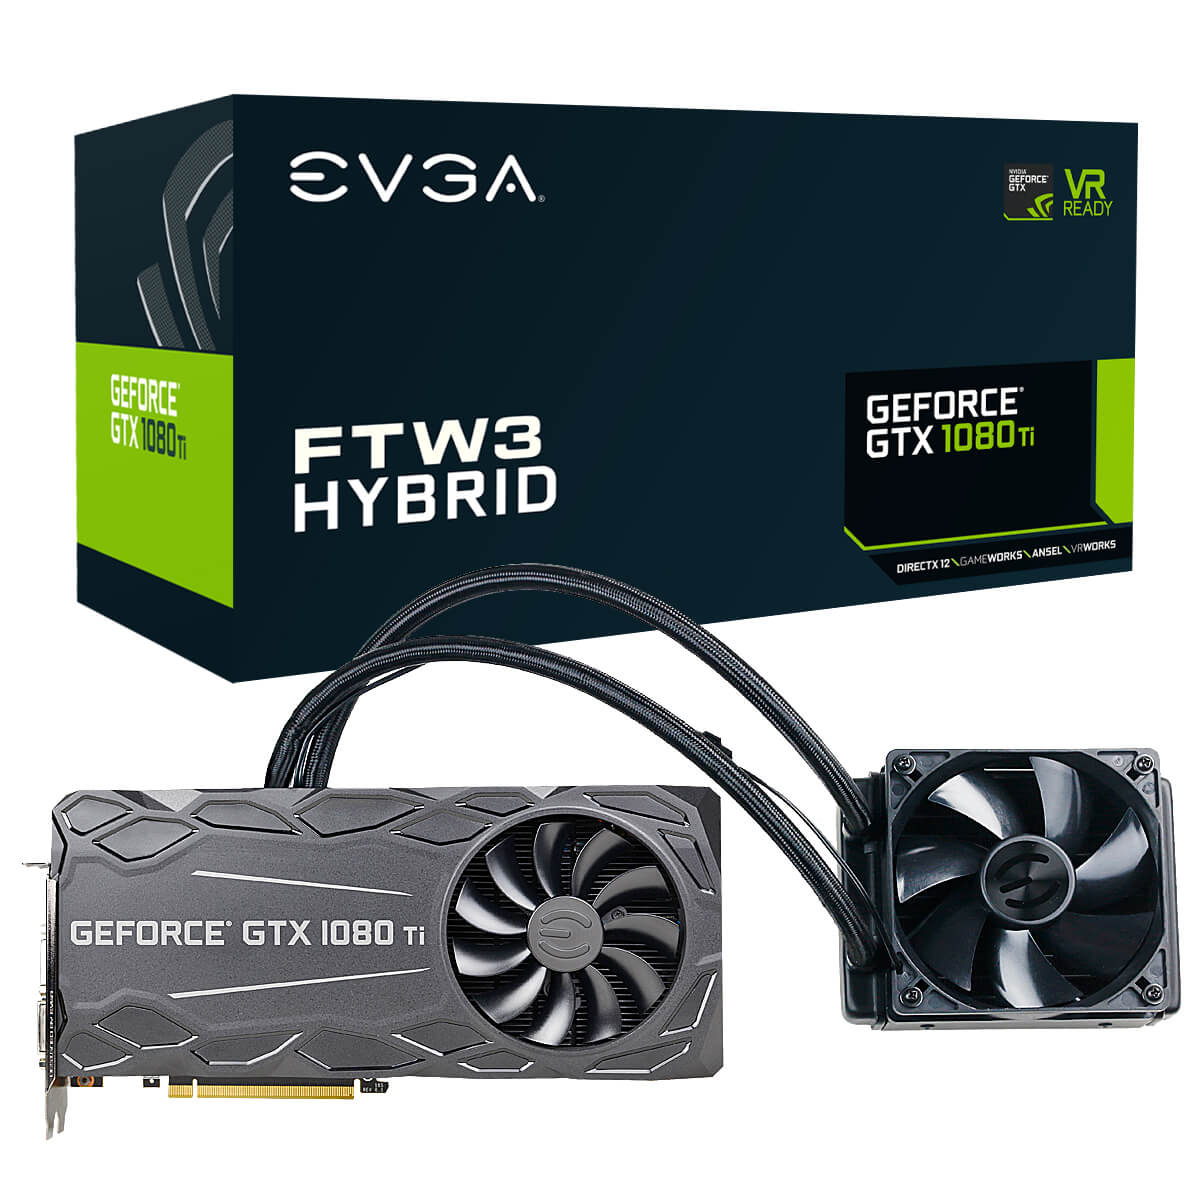 EVGA - Articles - EVGA GeForce GTX 1080 Ti